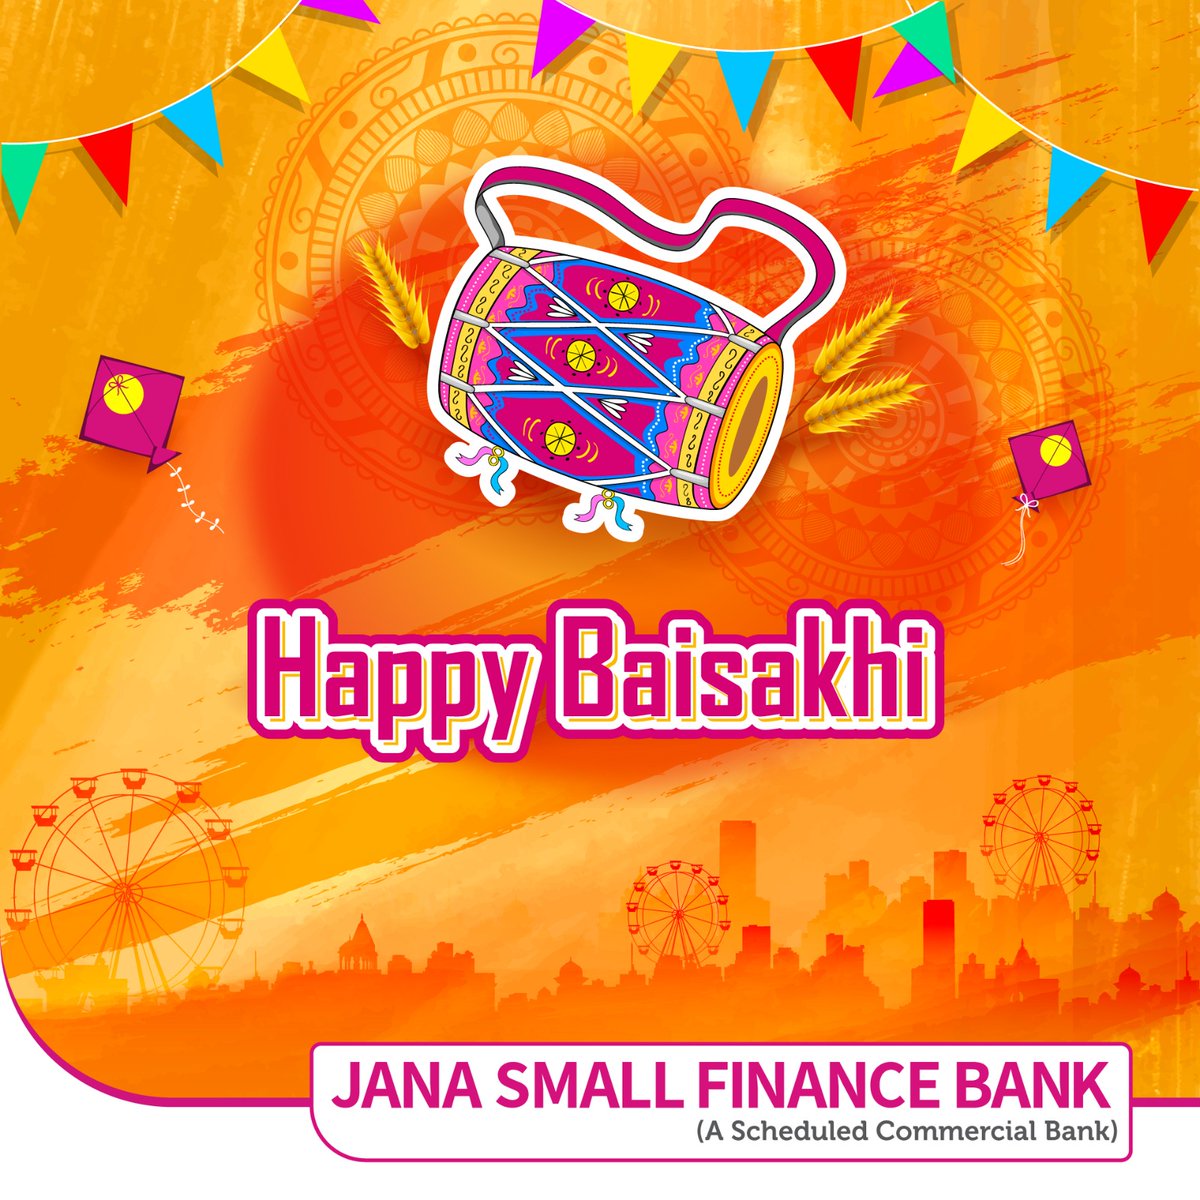 As we celebrate the harvest festival of Baisakhi, let's cherish the blessings of abundance and prosperity in our lives. Happy Baisakhi! #baisakhi #celebration #janabank